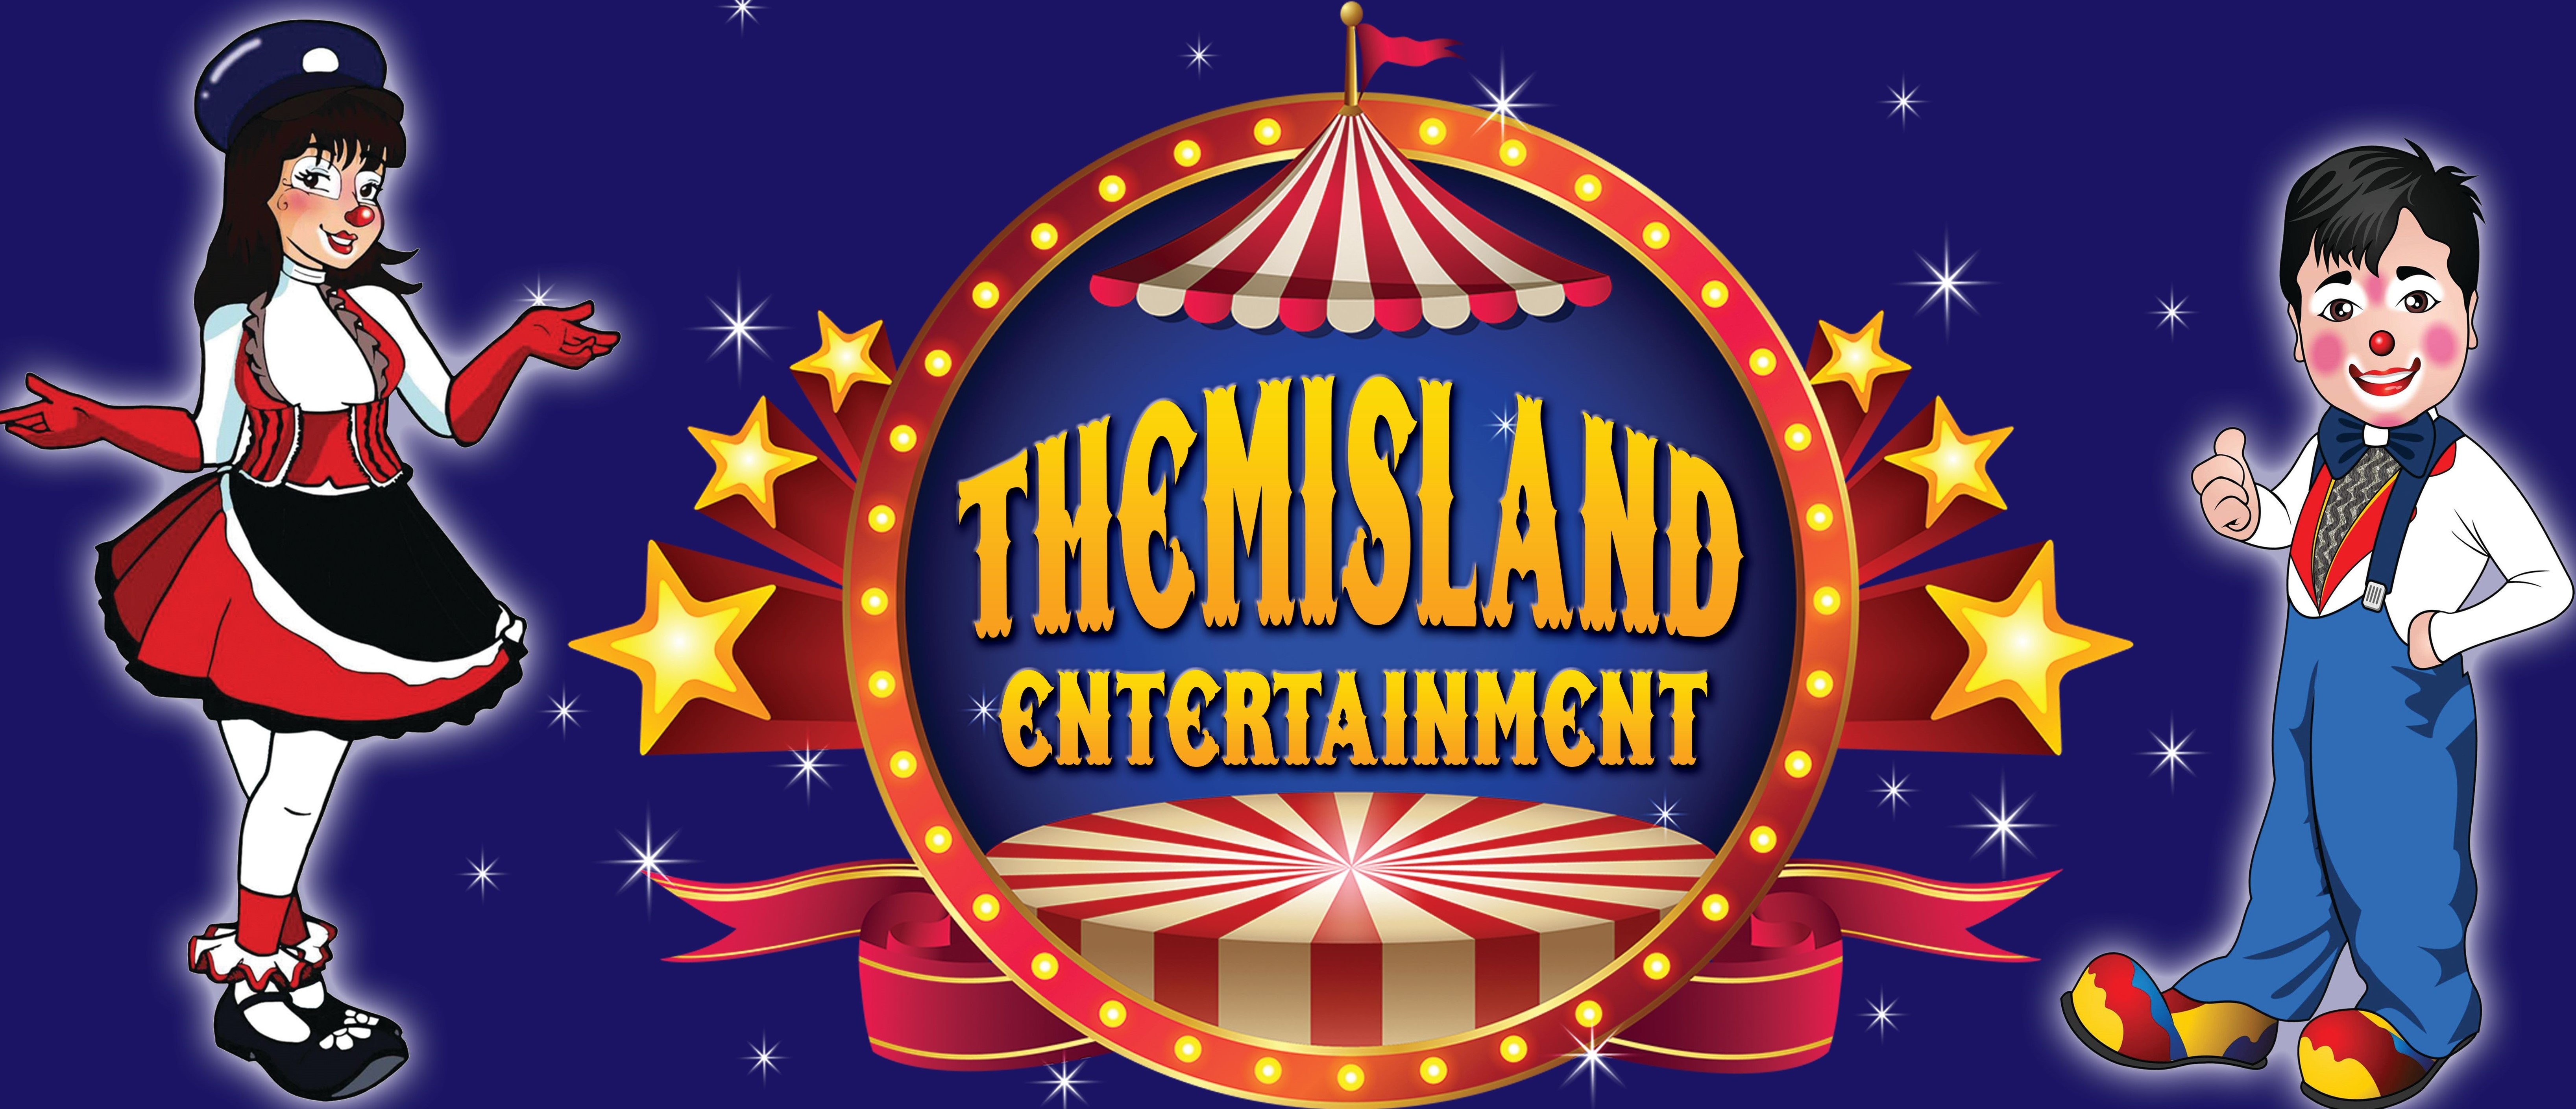 Themisland Entertainment Logo